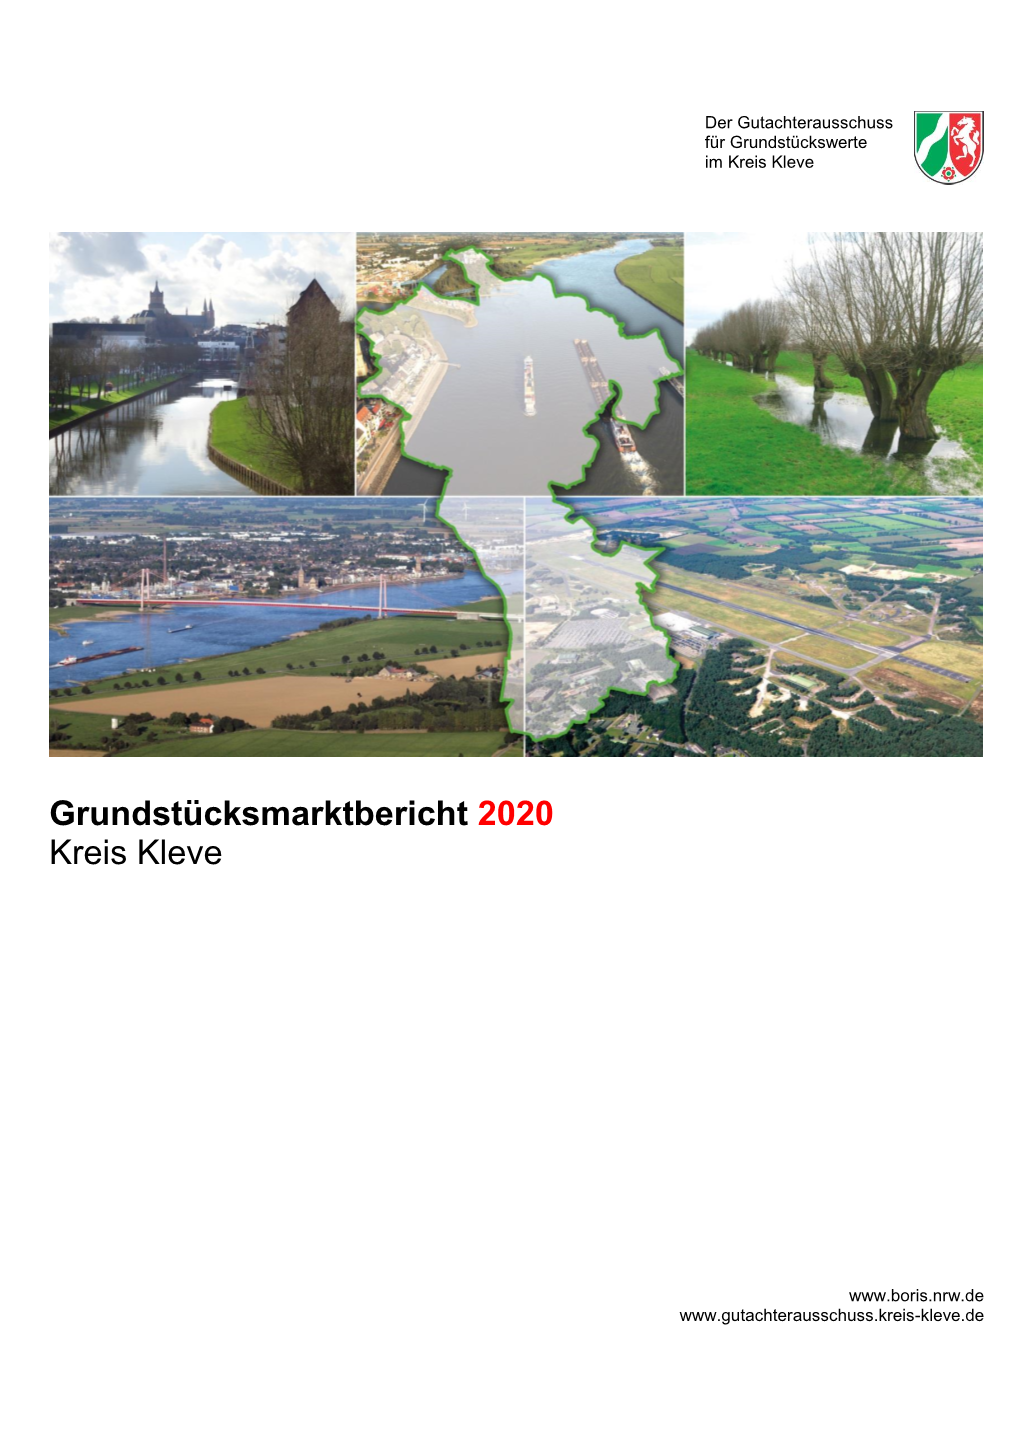 Grundstücksmarktbericht 2020 Kreis Kleve